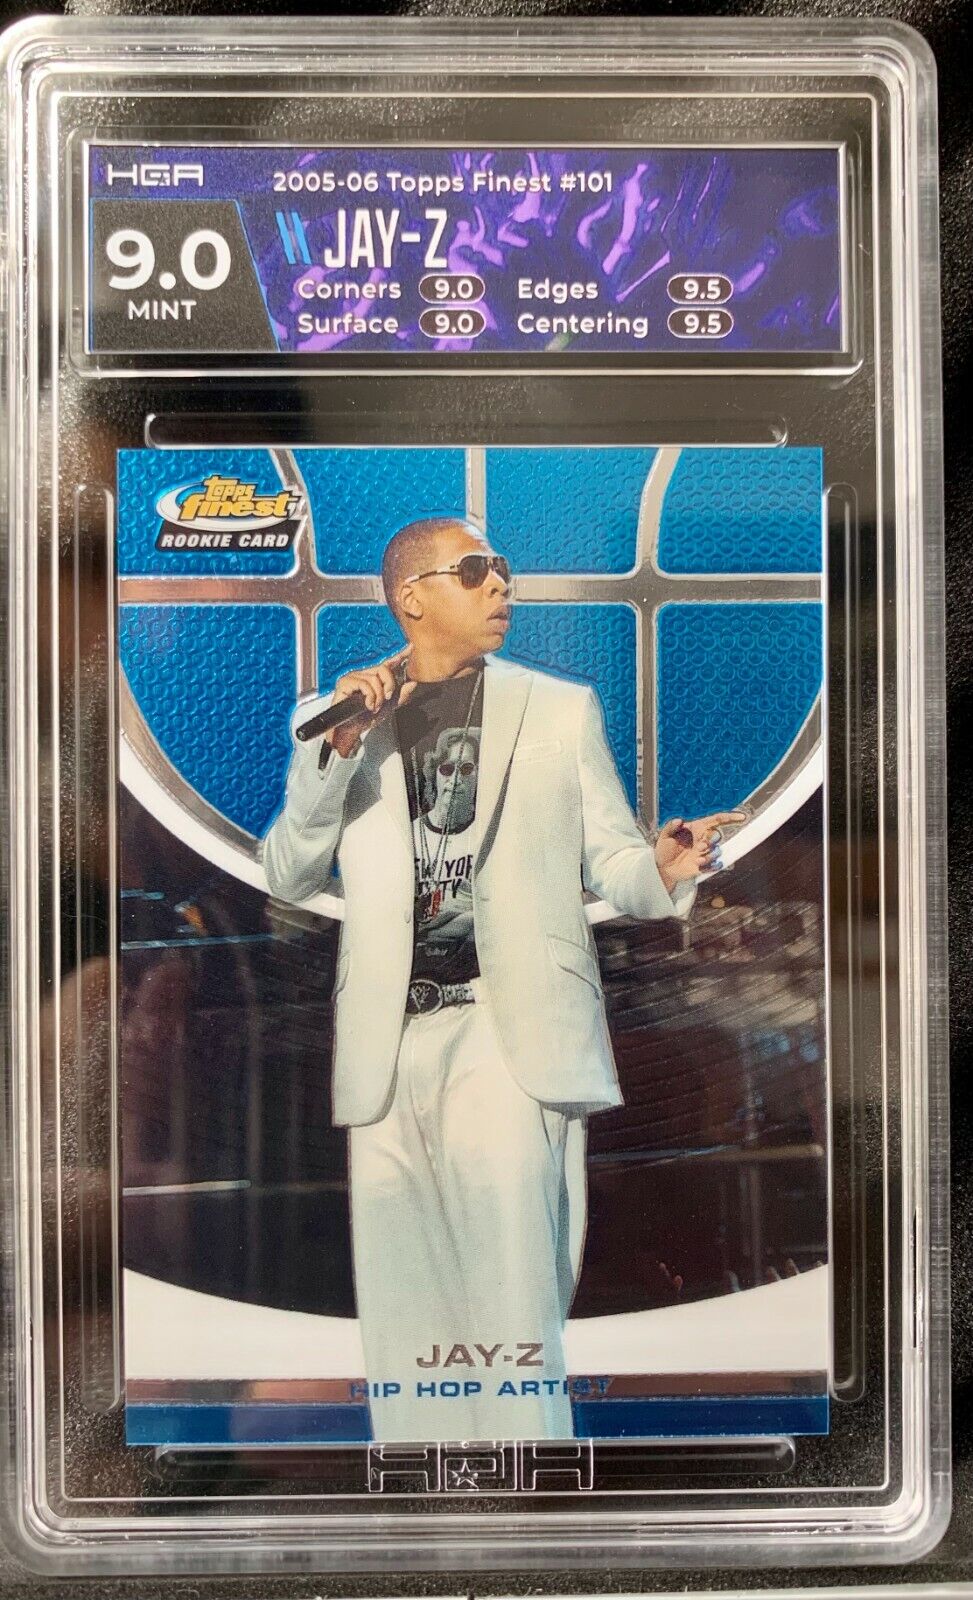 2005-06 Topps Finest Blue Refractor #101 Rapper Jay-Z /599 HGA 9 Custom Label